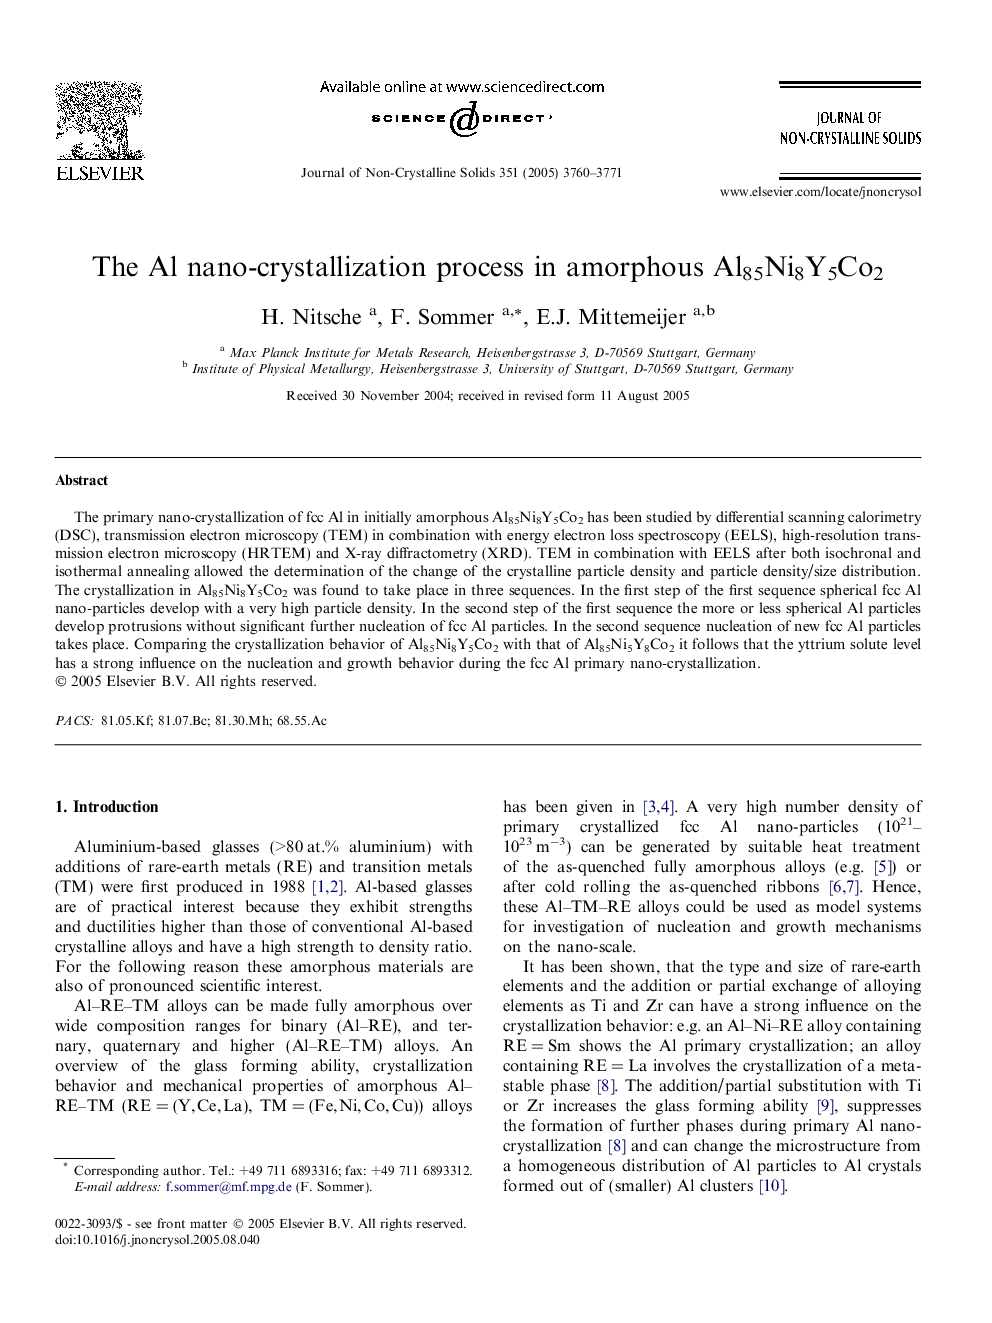 The Al nano-crystallization process in amorphous Al85Ni8Y5Co2